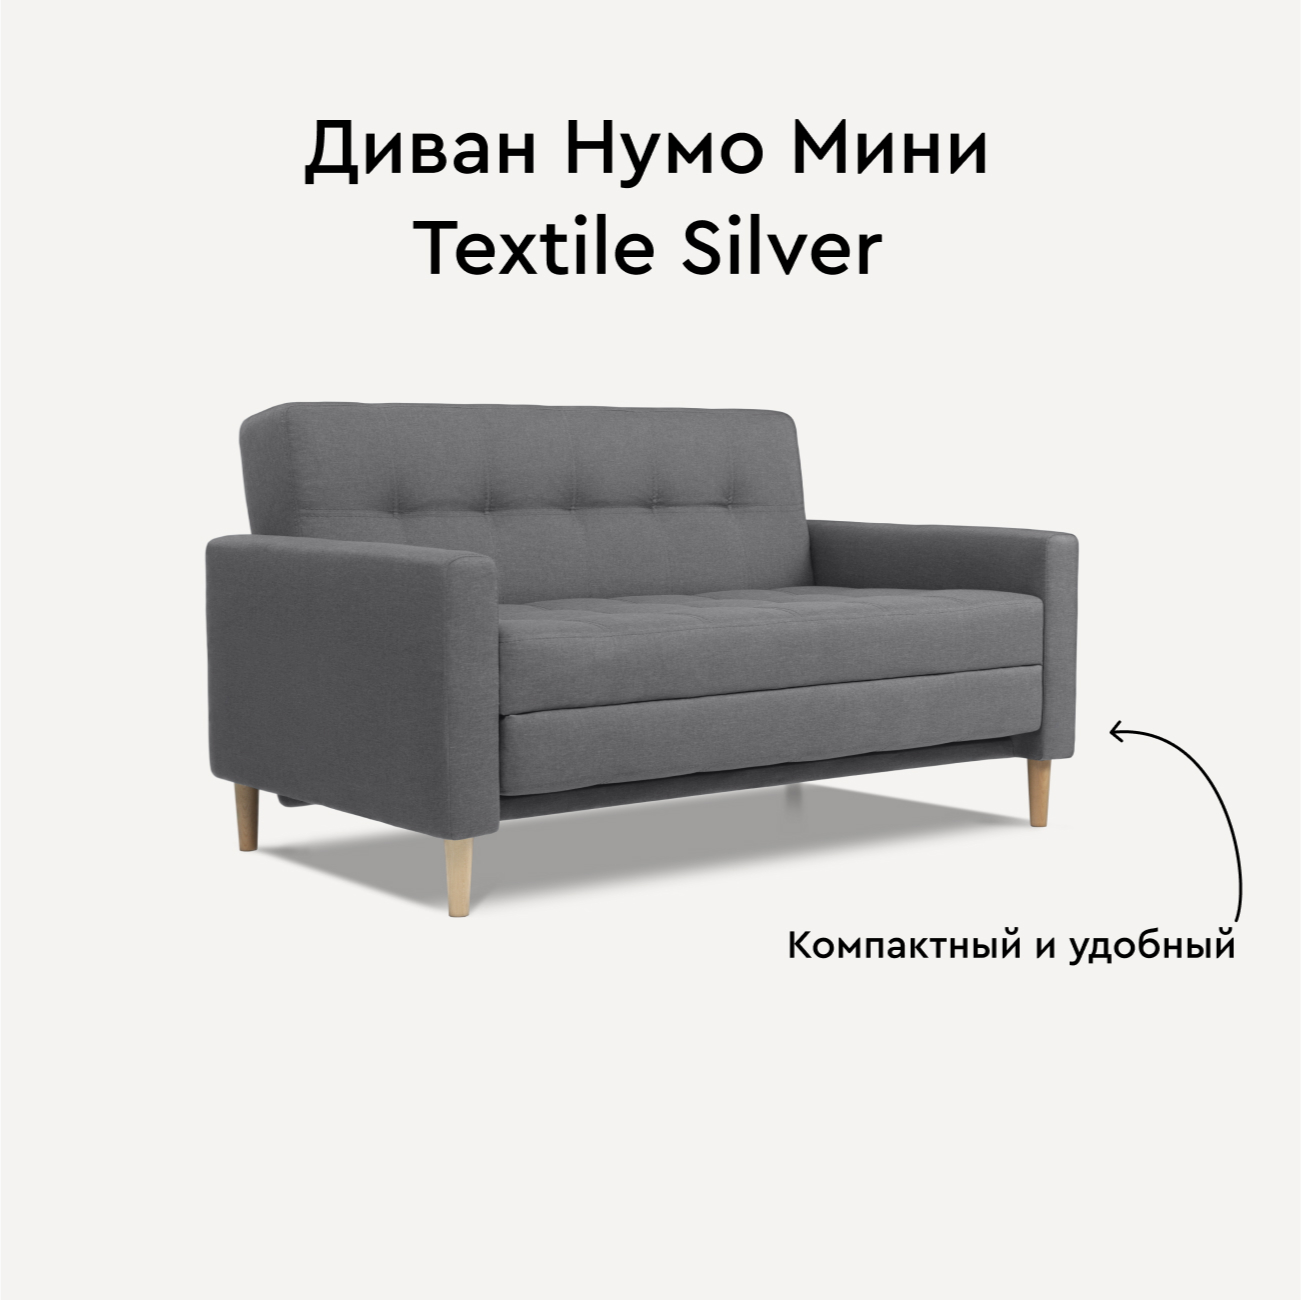 Диван Divan.ru Нумо Мини Textile Silver 142х87х79 - купить в Москве, цены на Мегамаркет | 600016270989